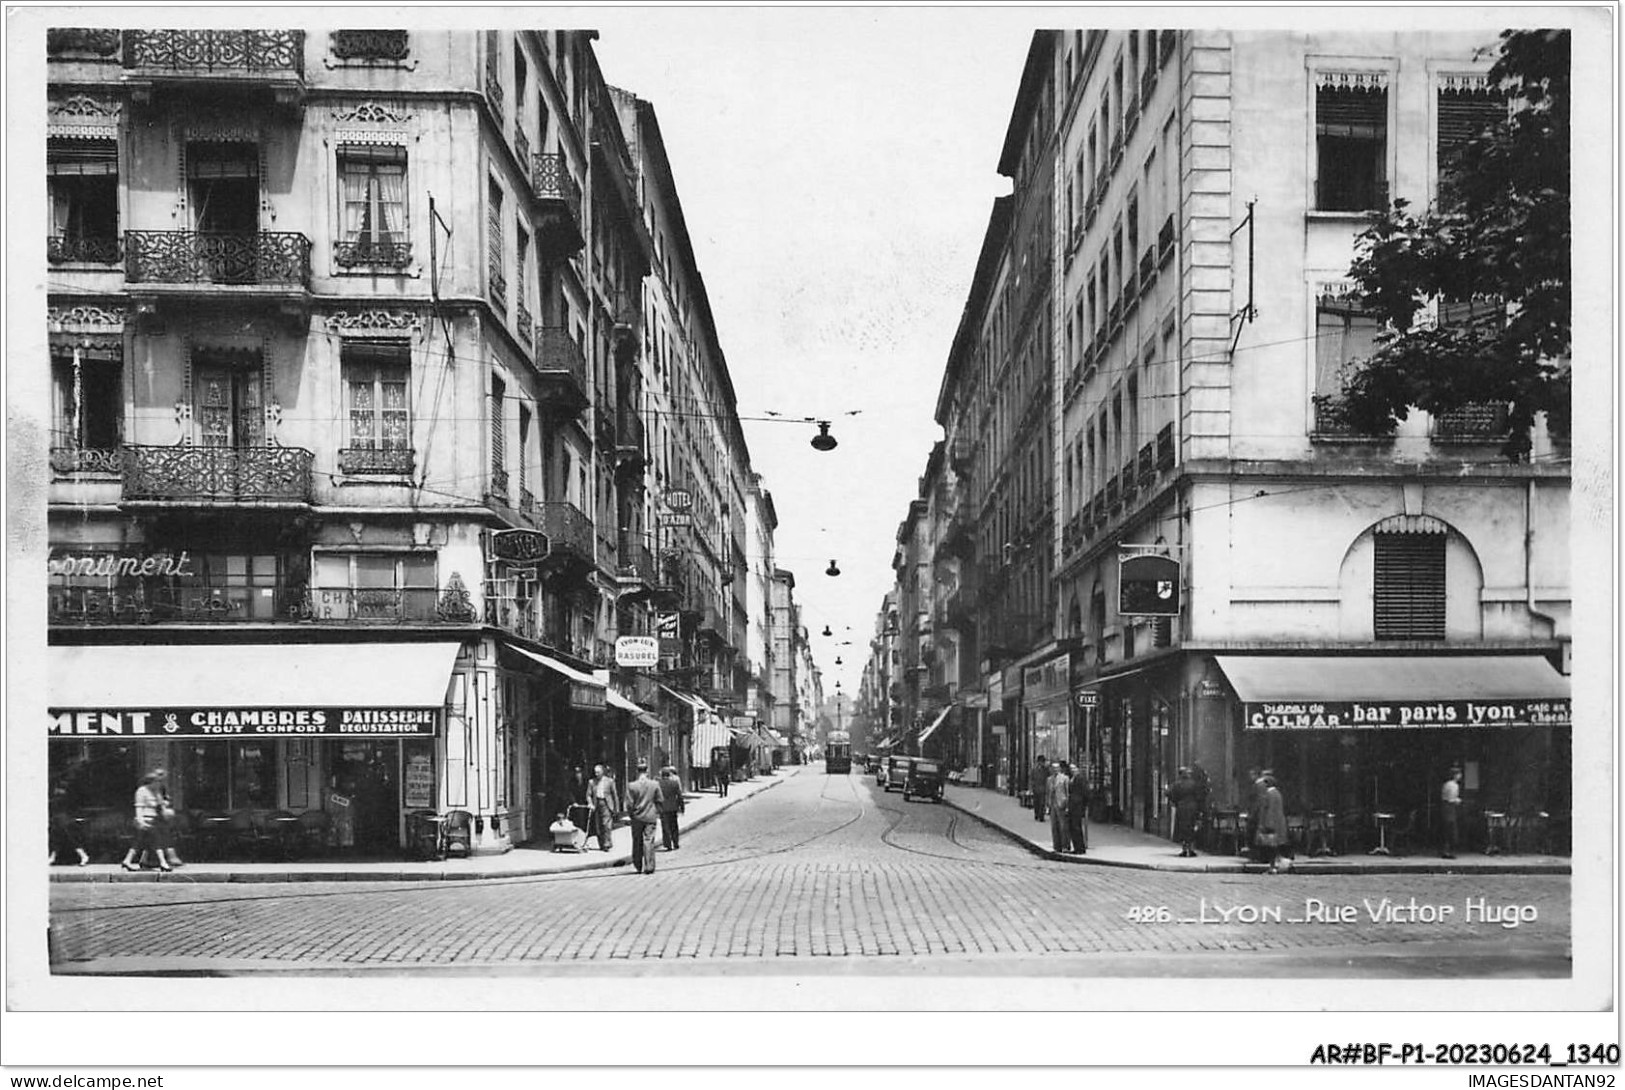 AR#BFP1-69-0671 - LYON - Rue Victor Hugo - Commerce - Lyon 1